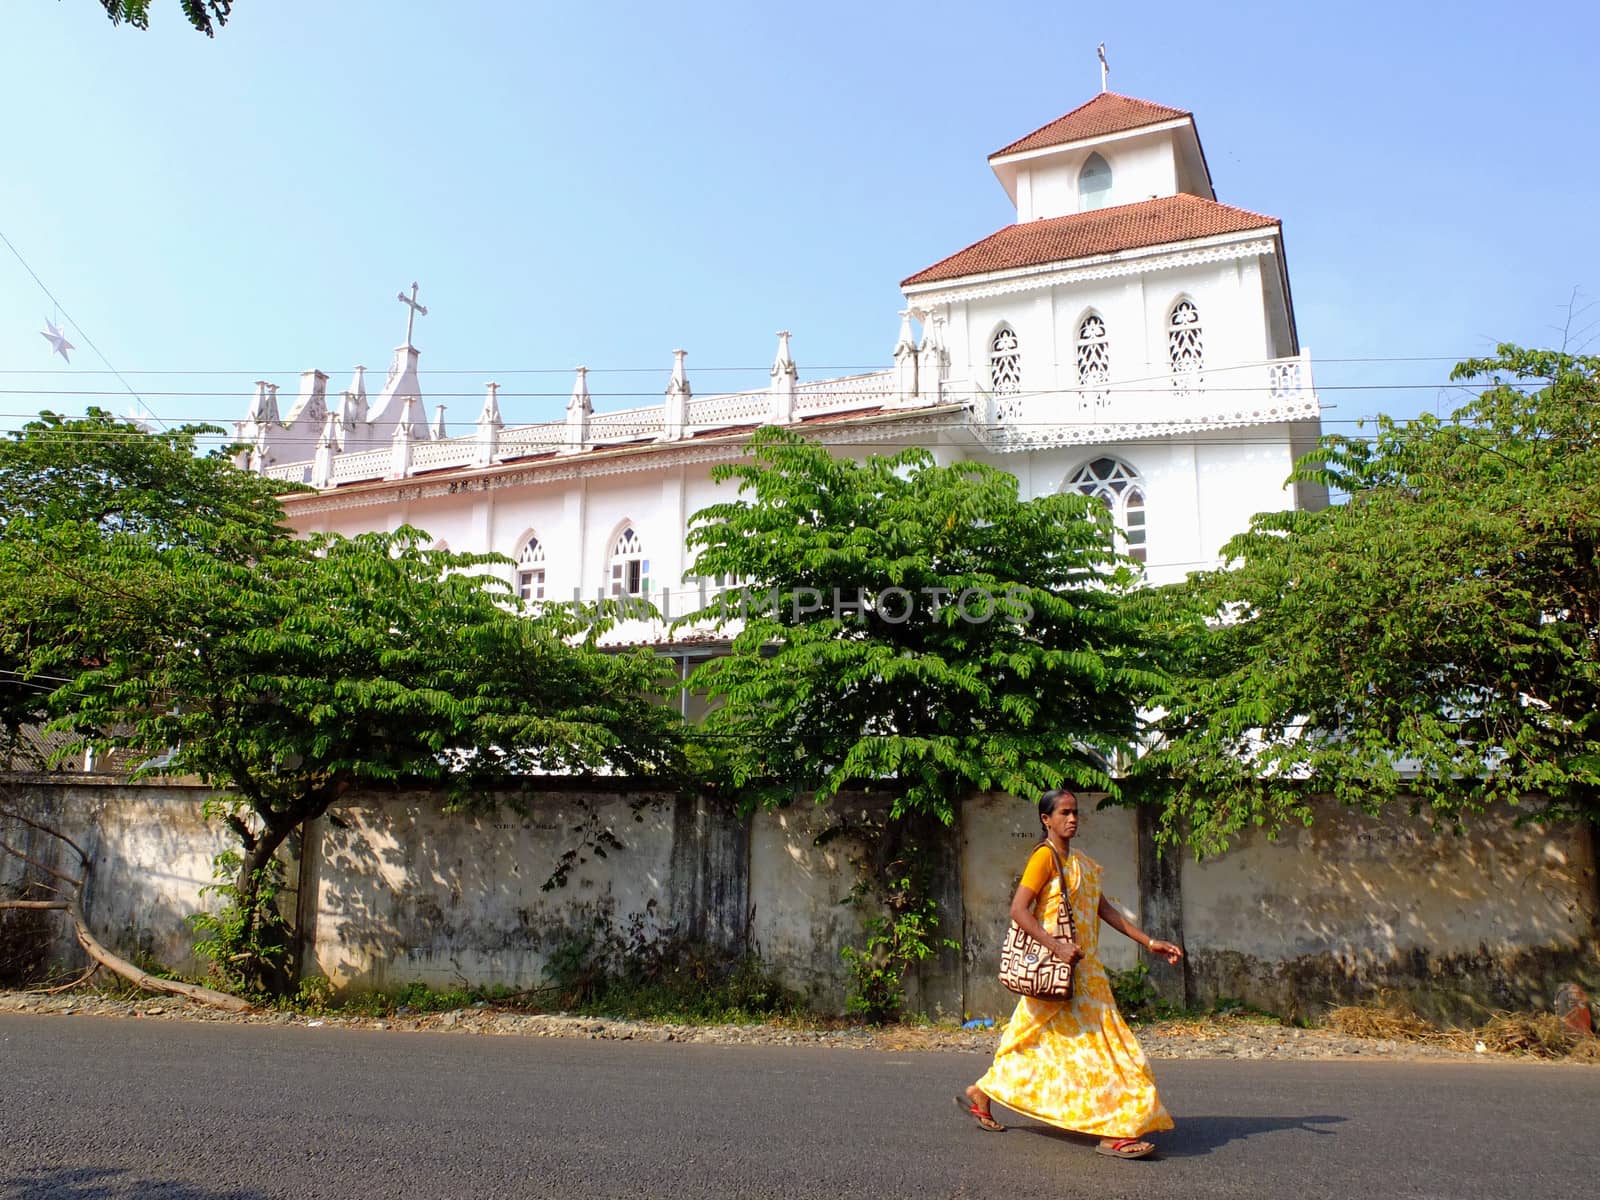 Church in India by Komar